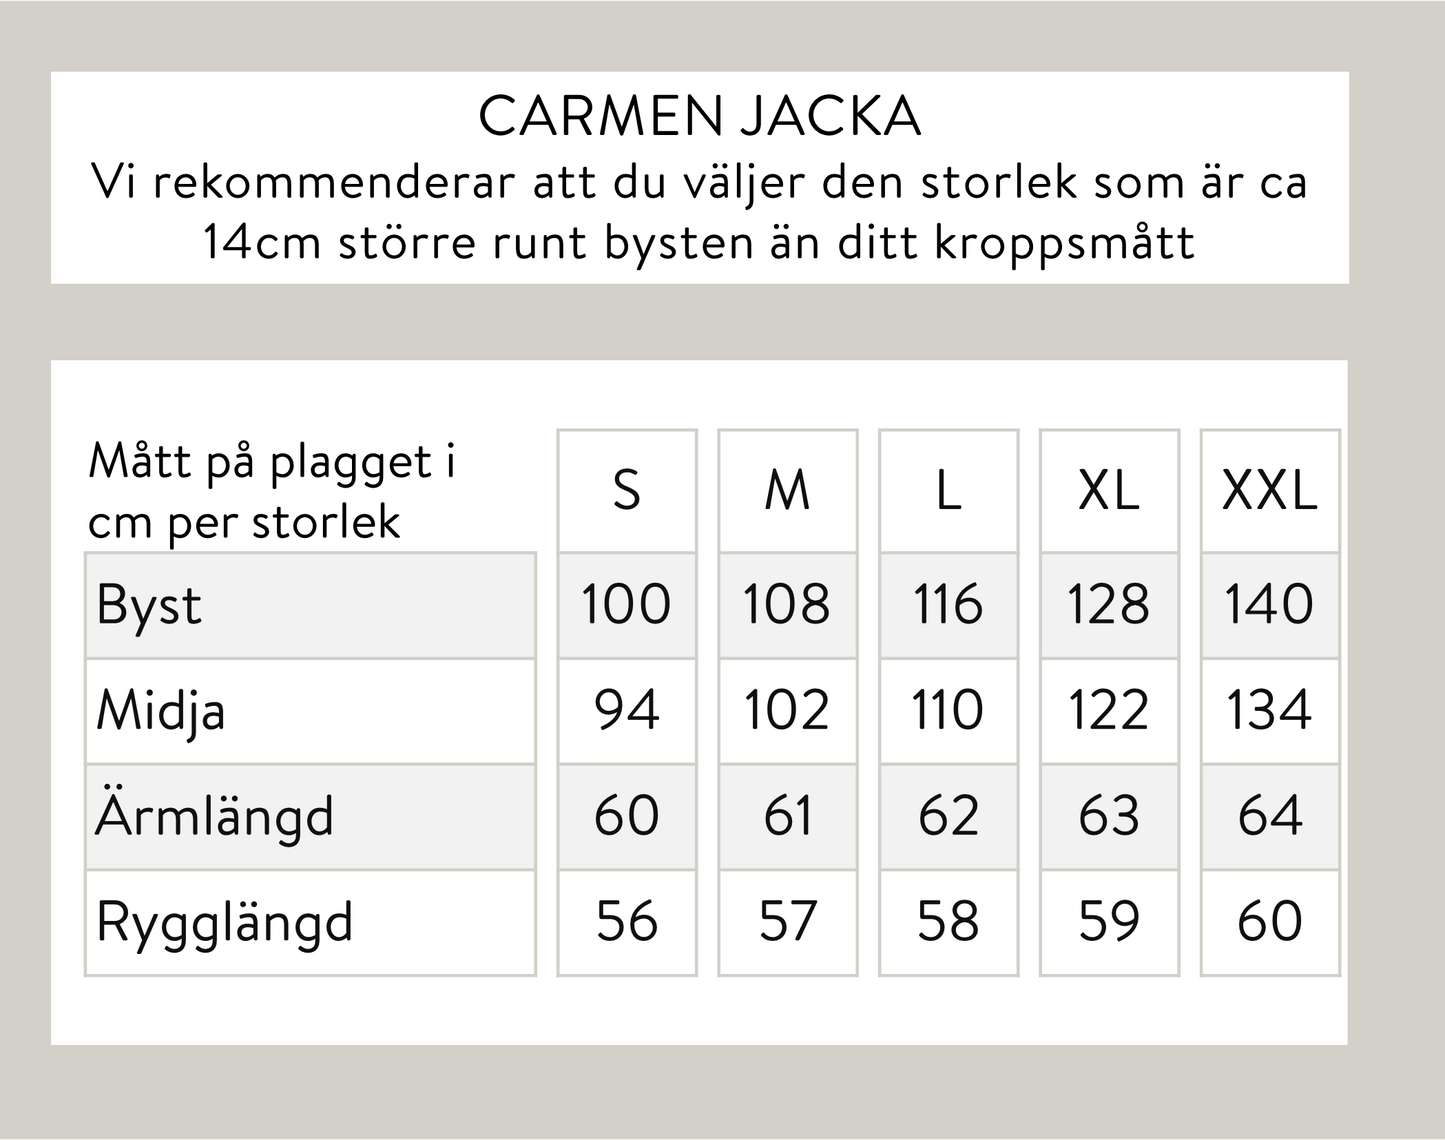 Carmen jacka - Offwhite